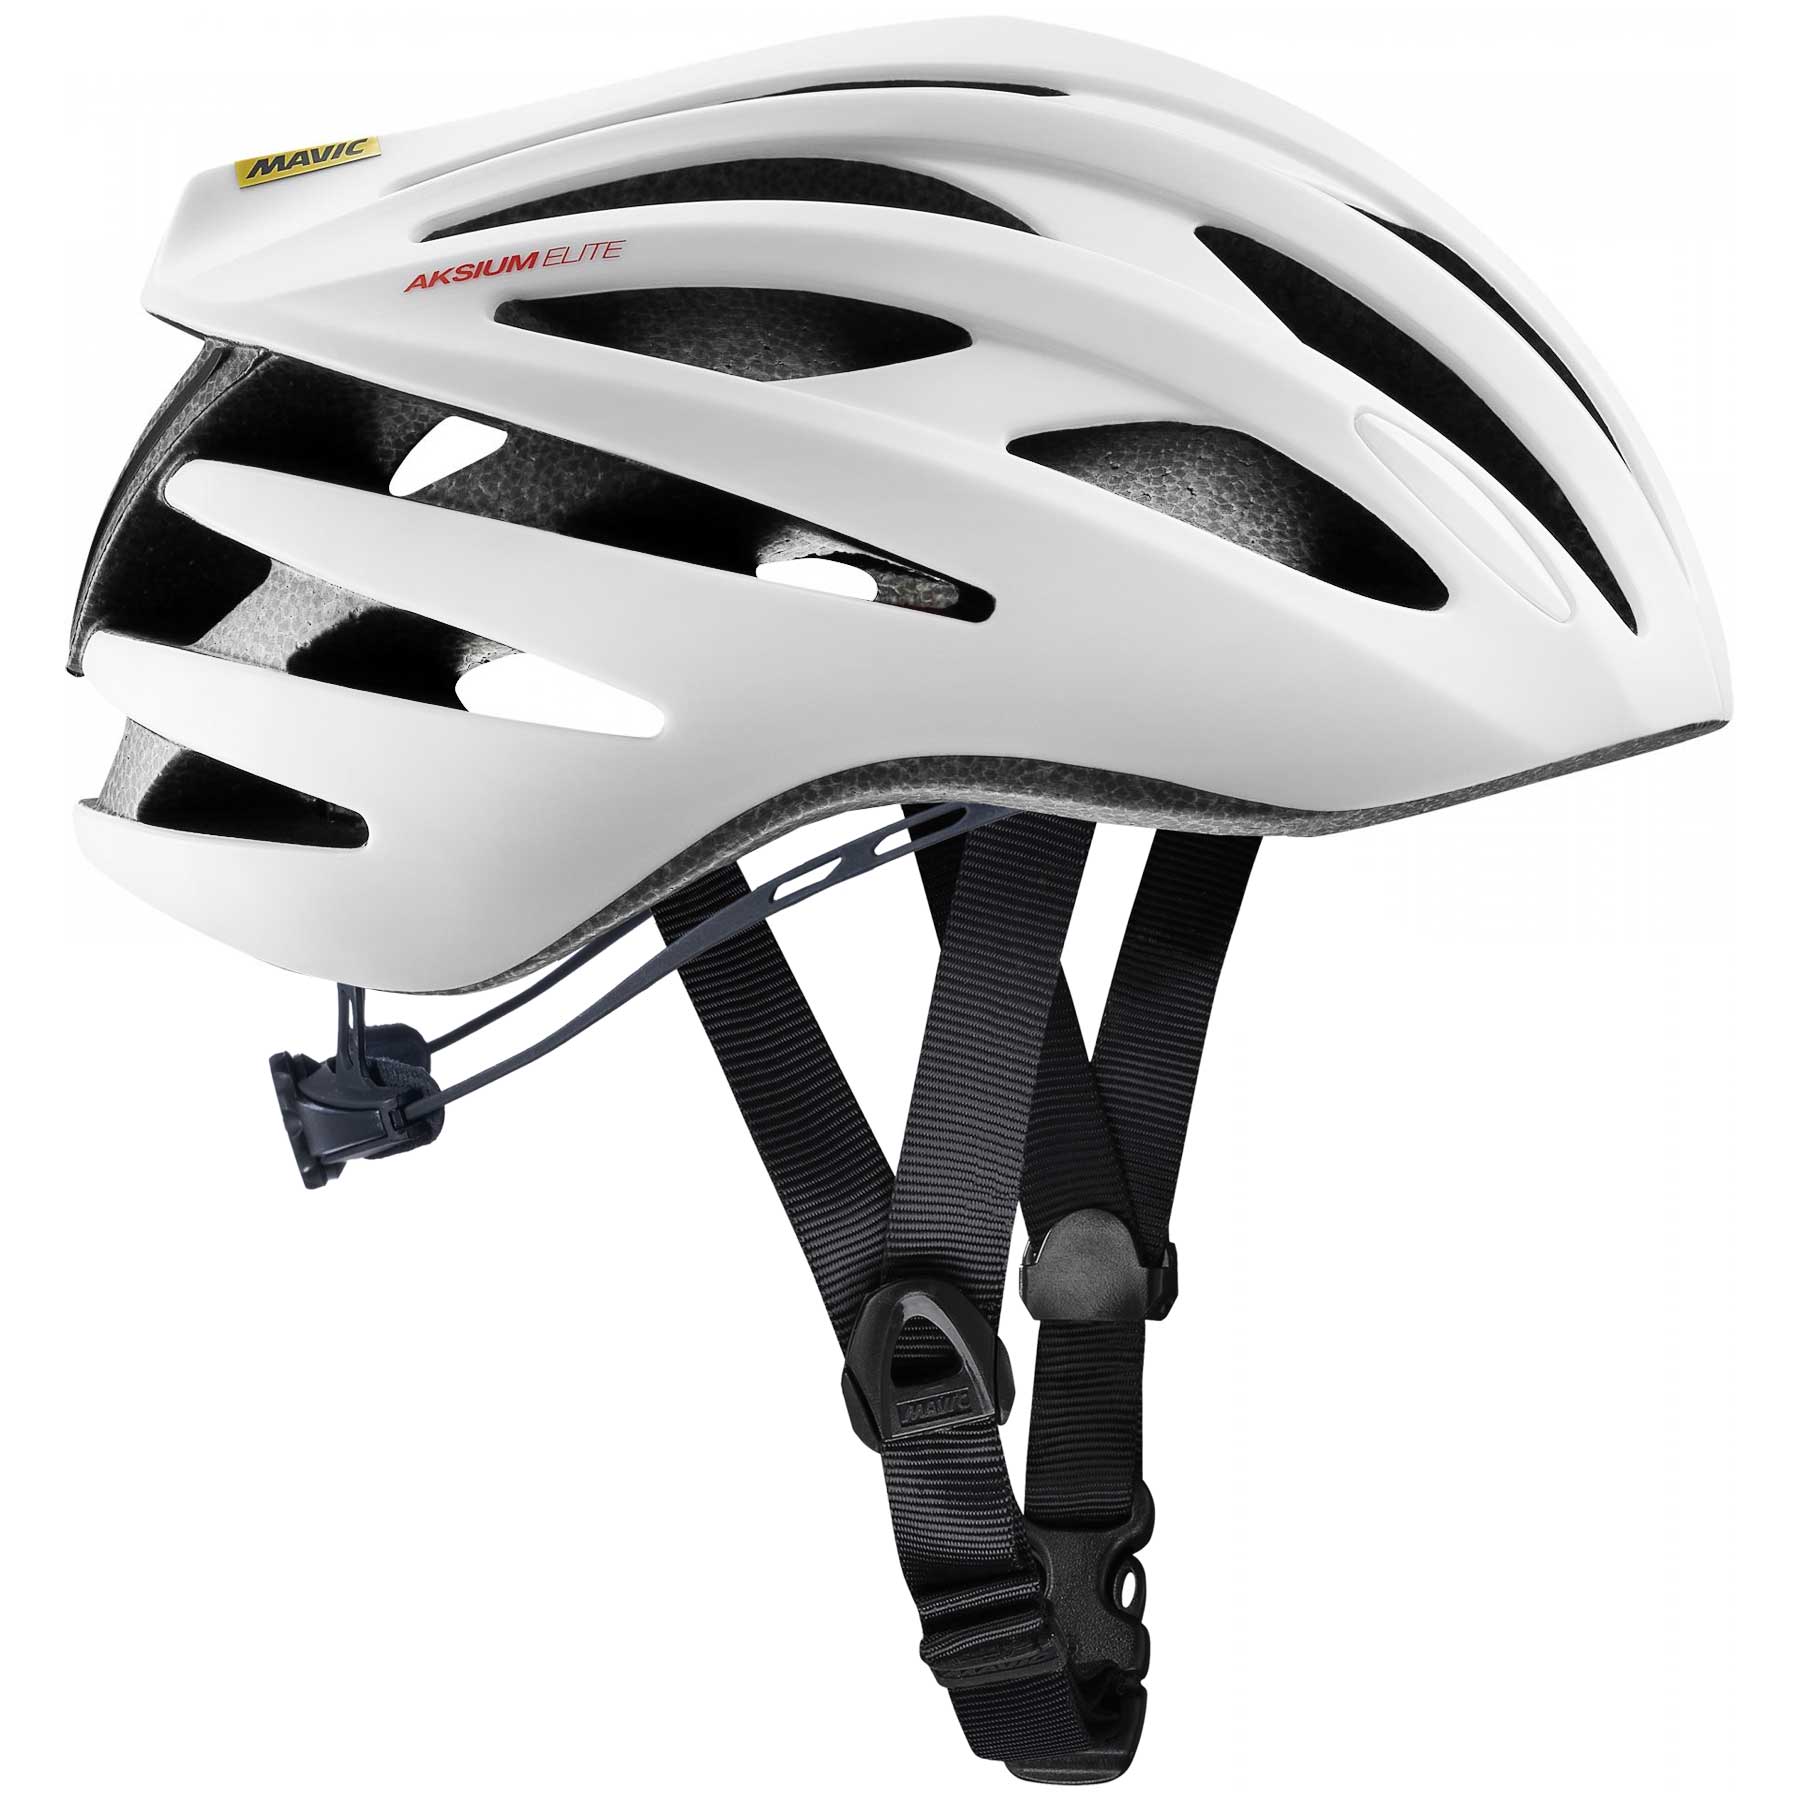 Picture of Mavic Aksium Elite Helmet - white/black